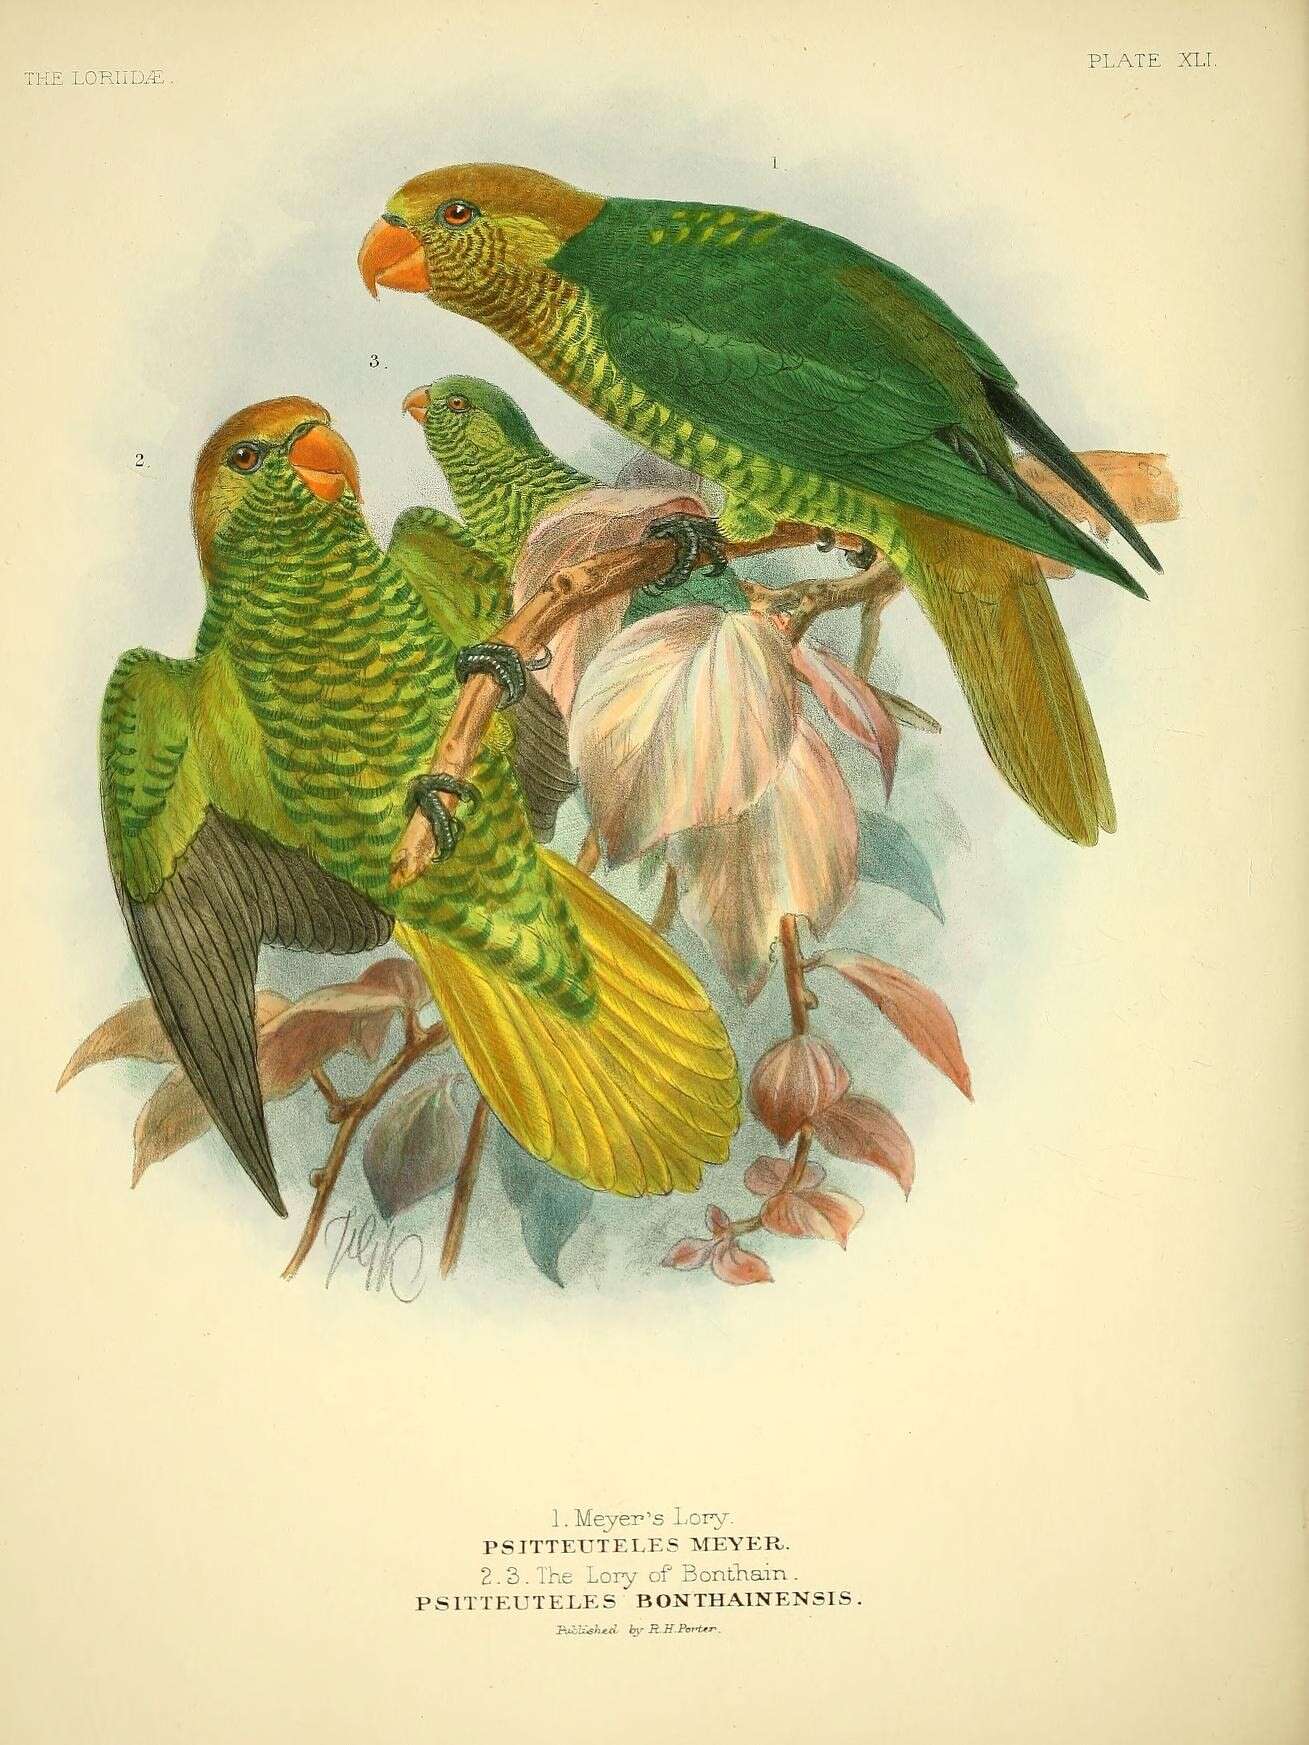 Image of Citrine Lorikeet or Yellow-and-green Lorikeet